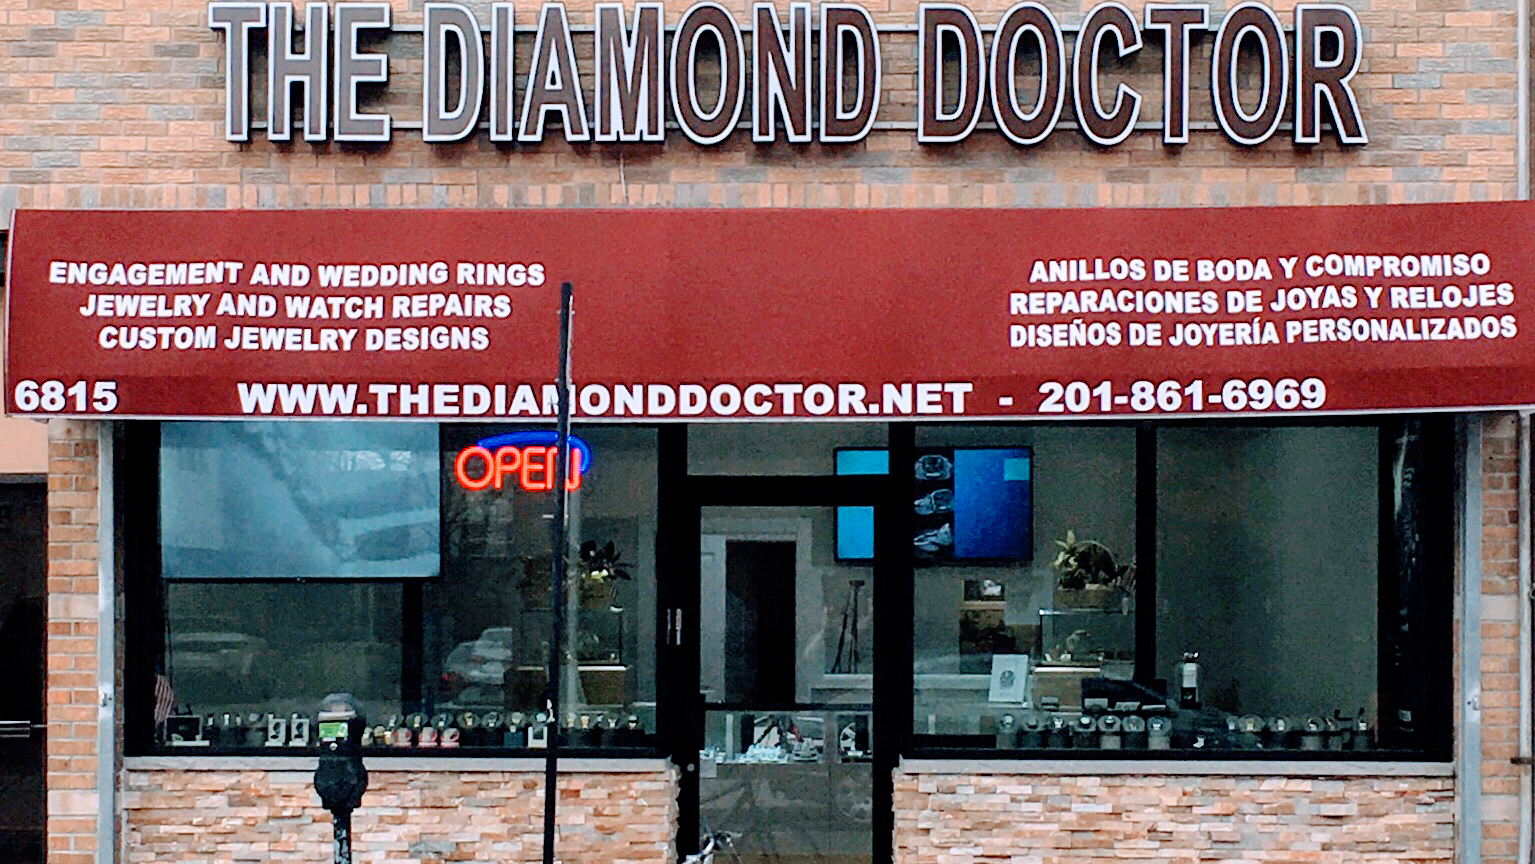 The Diamond Doctor